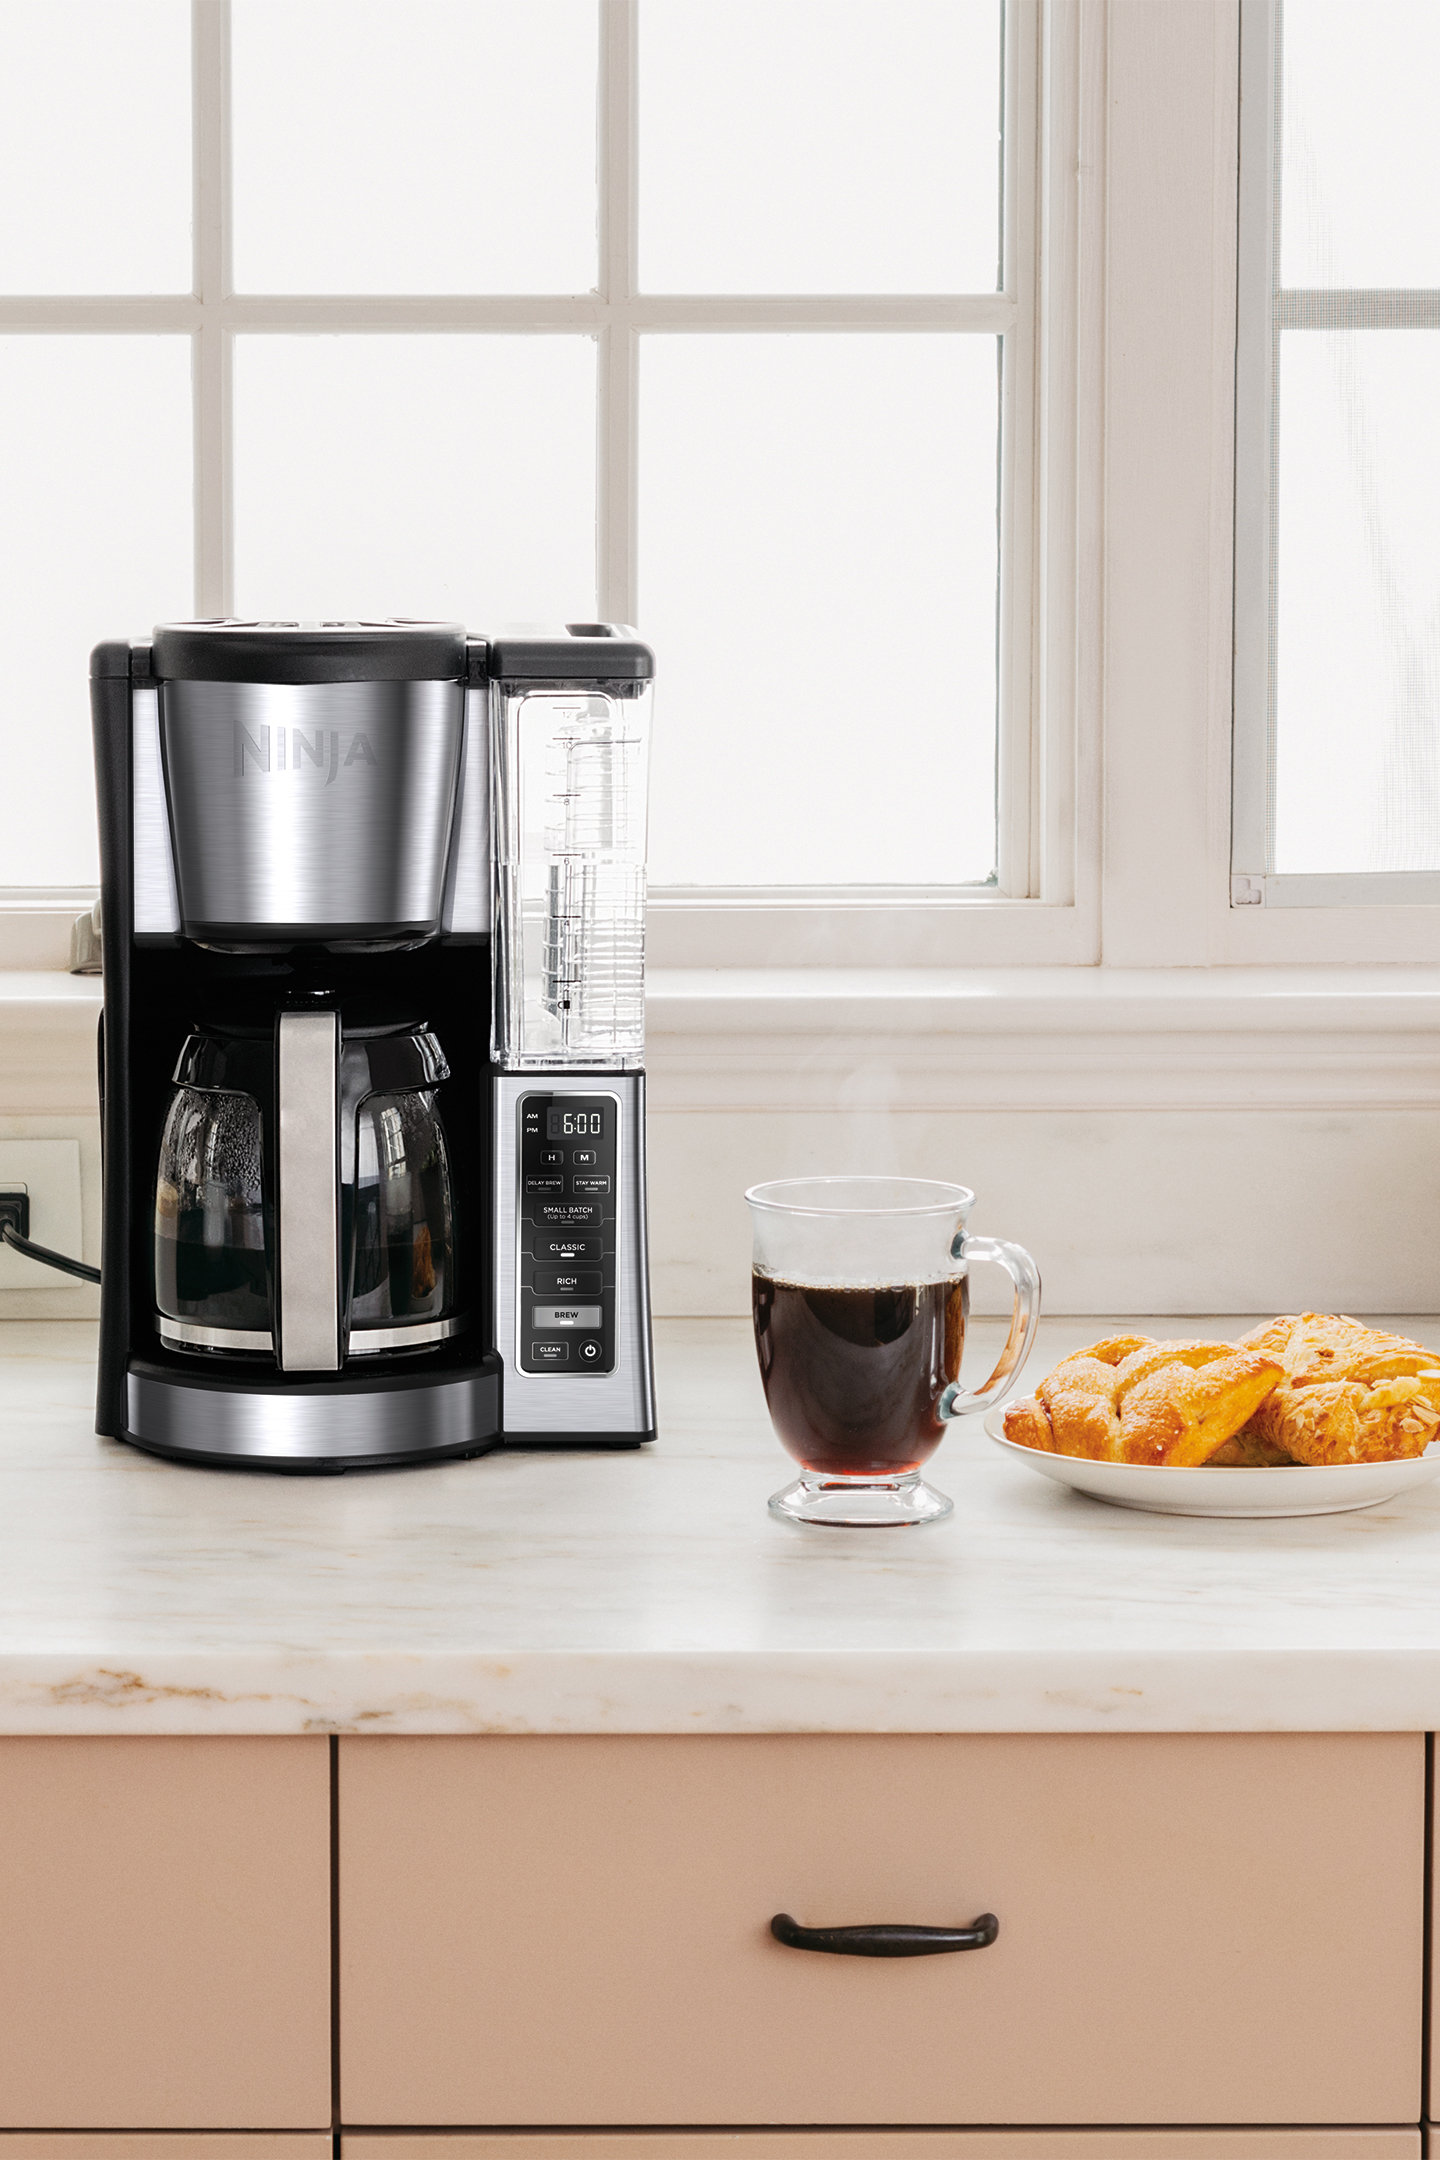 Cup Coffee Maker, Programmable Coffee Machine & Ice Tea Maker with Glass  Carafe, Drip Coffee Pot, Auto Keep Warm, Anti-Drip, 900 - AliExpress